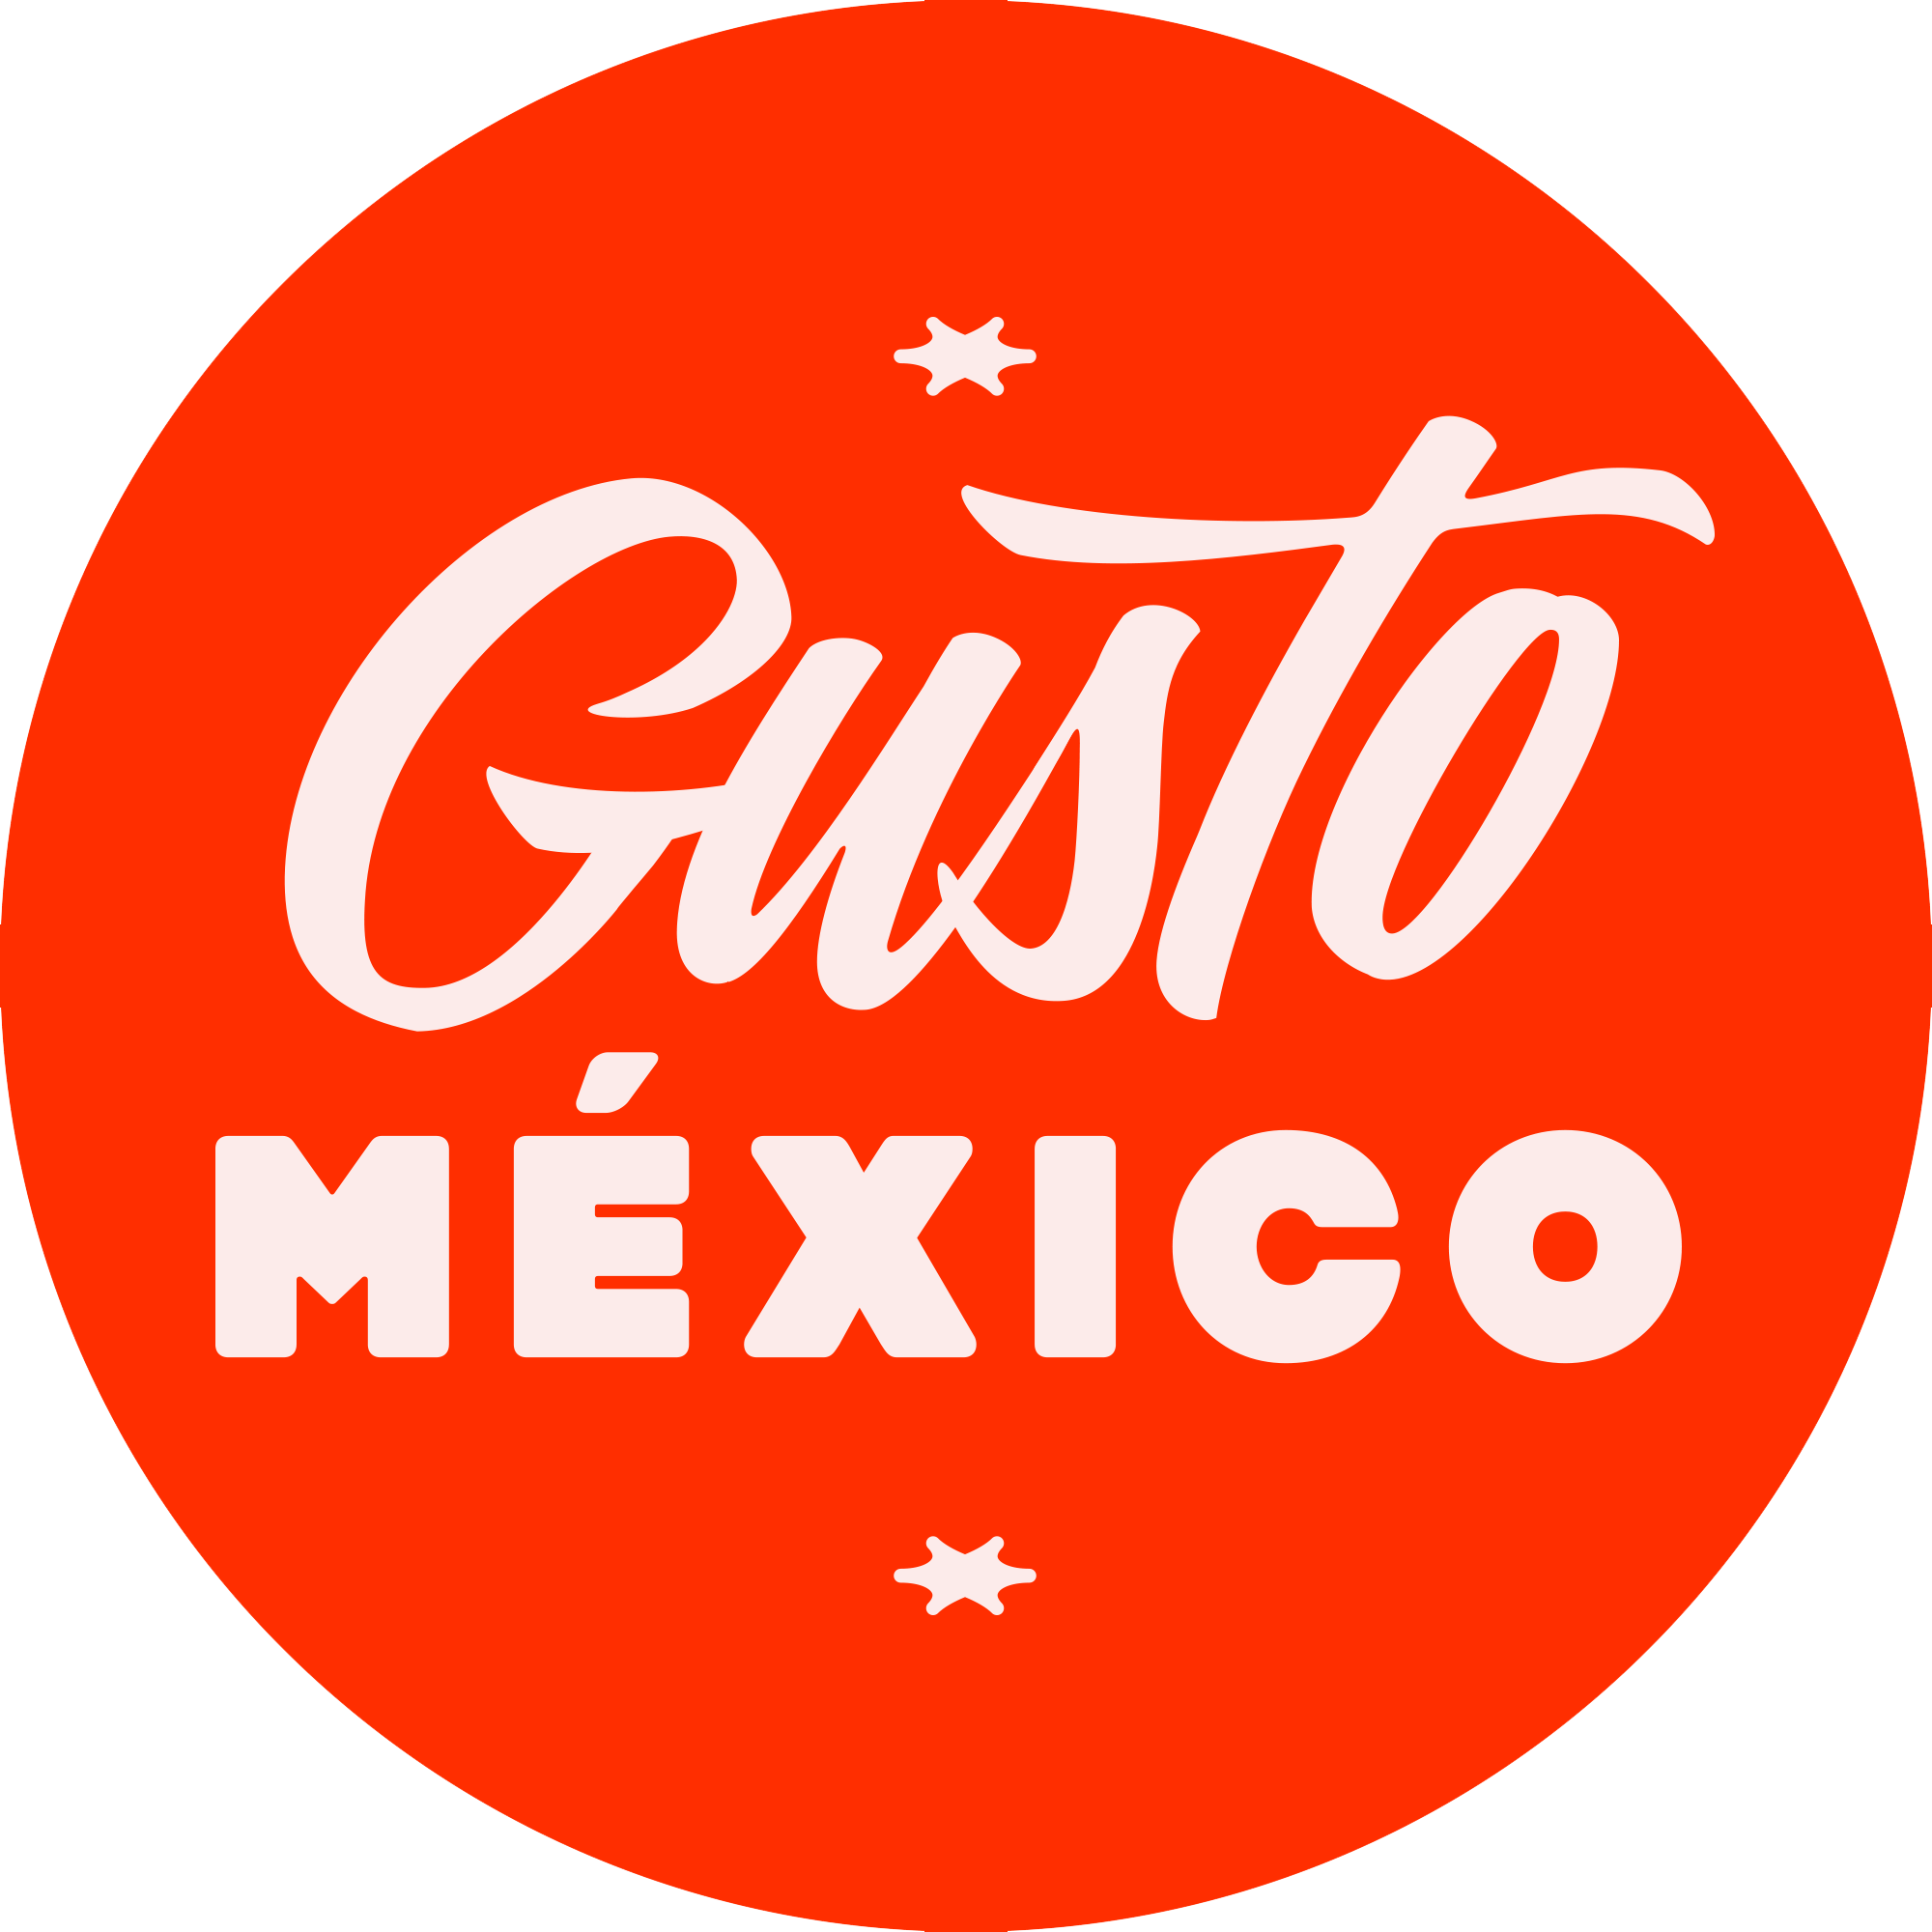 Gusto Mexico